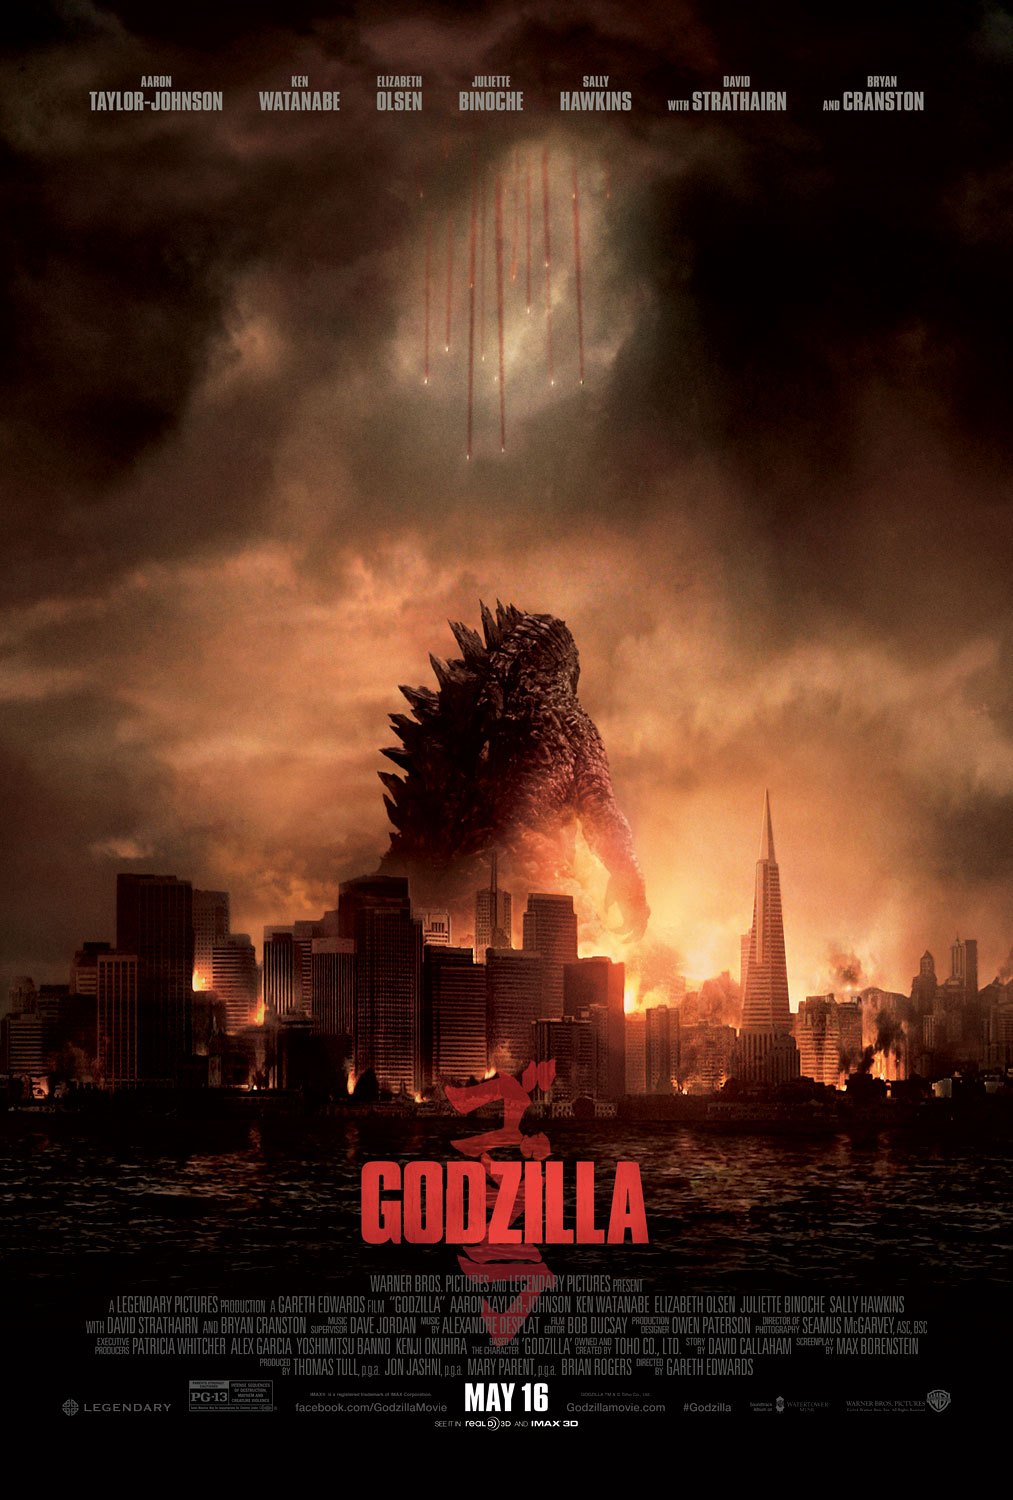 Poster for the upcoming reboot of "Godzilla" (Warner Bros.)